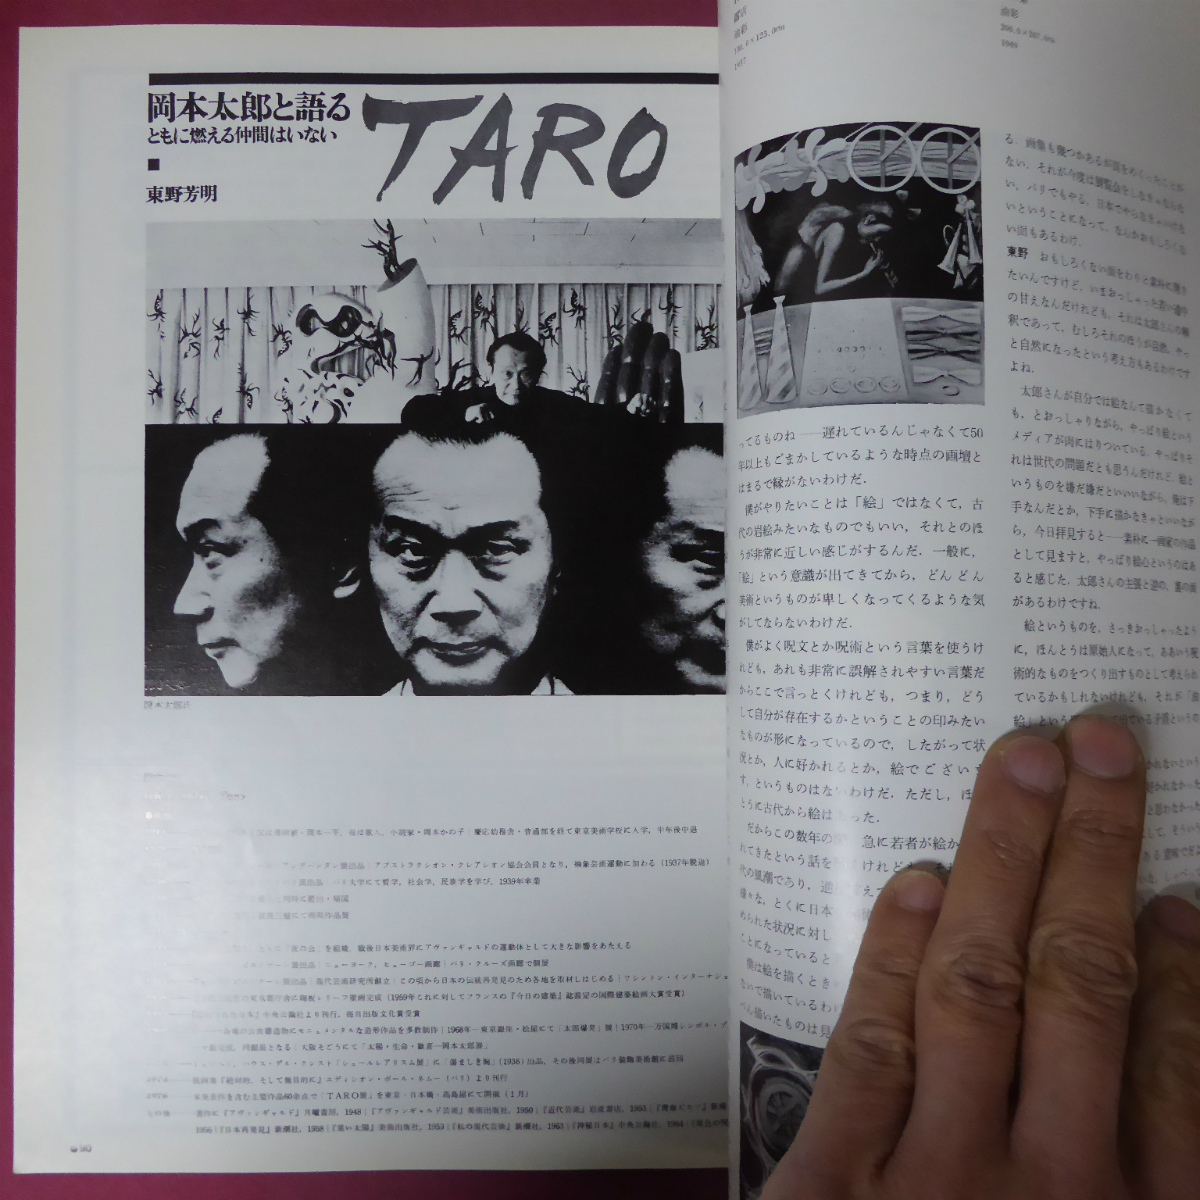 z25 fine art magazine [...][ special collection :e car -. mystery . world /dado/ Okamoto Taro / Kyoto bienna-re*76/te.byufe]